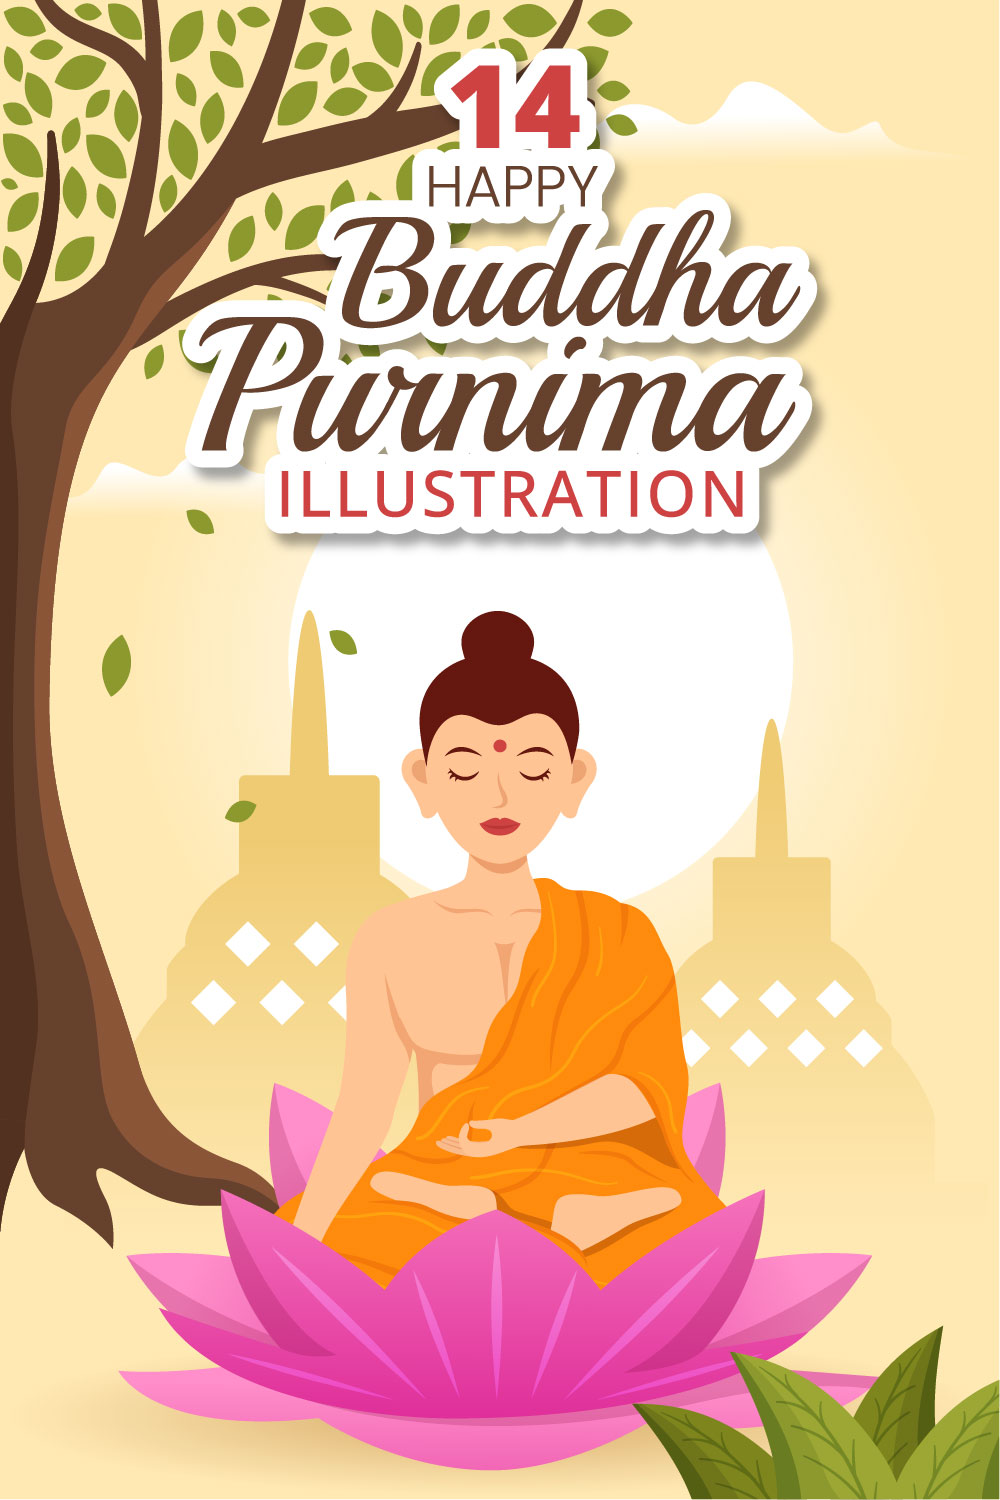 14 Happy Buddha Purnima Illustration pinterest preview image.